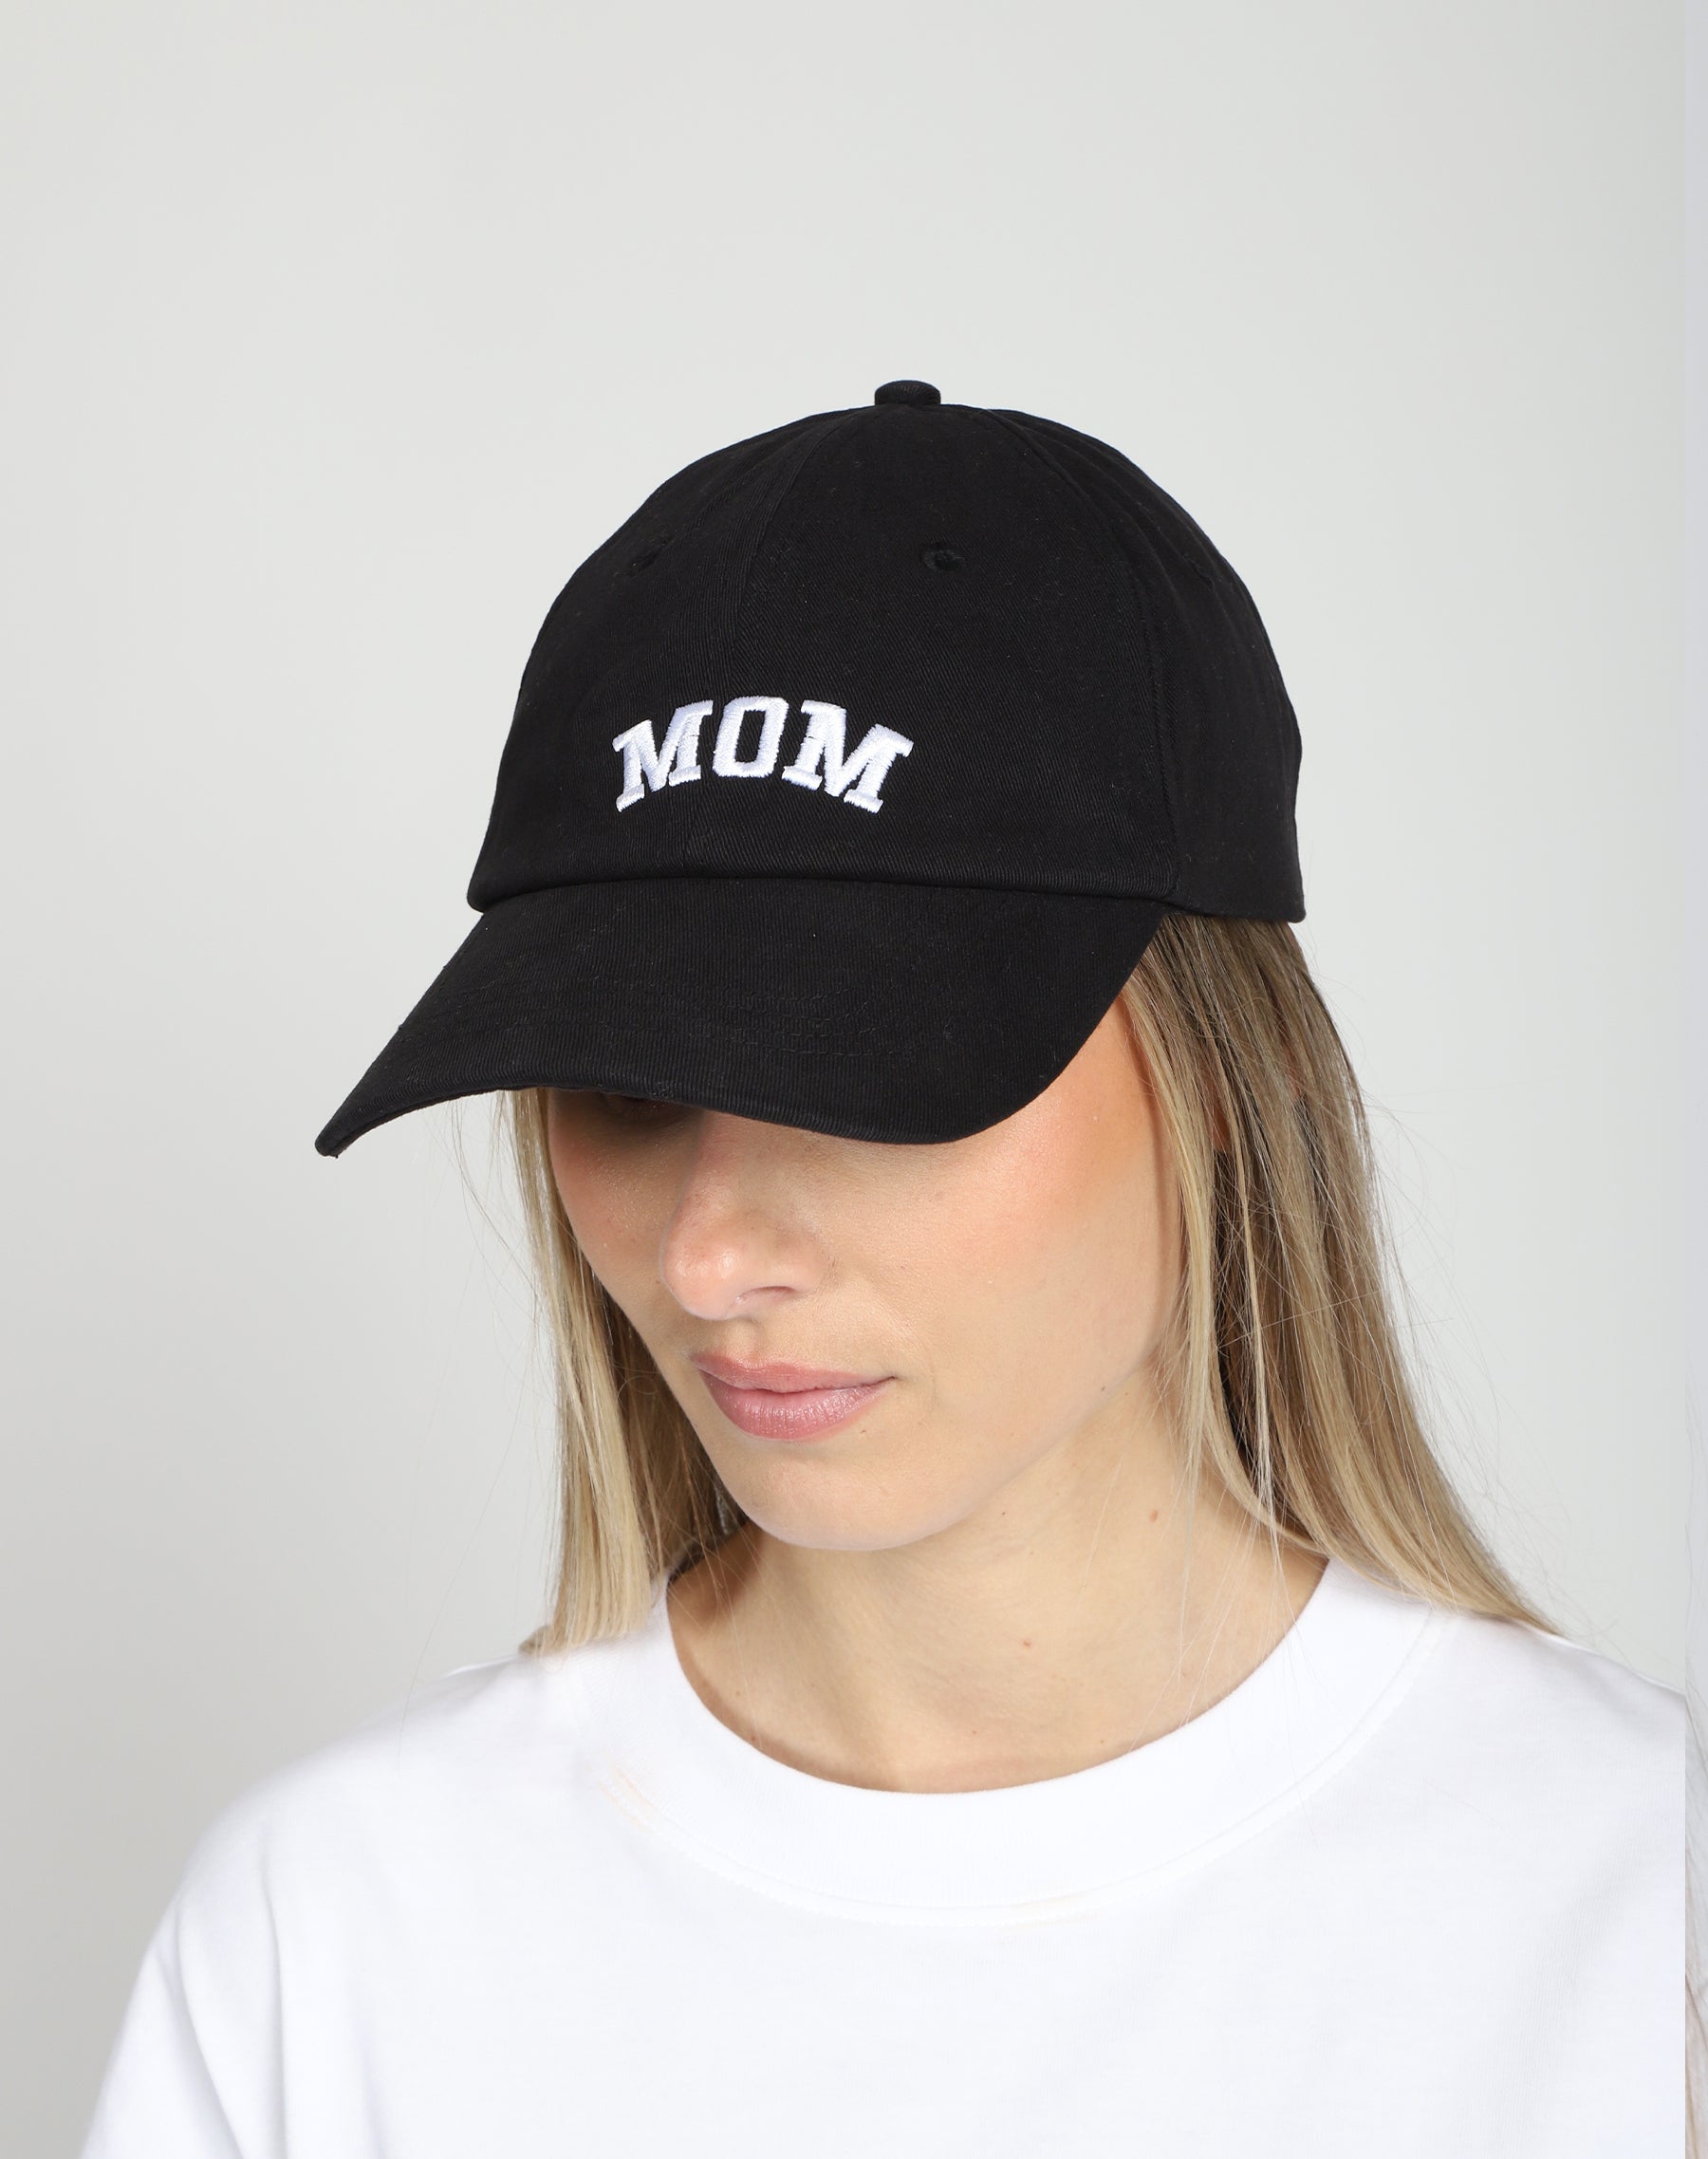 The "MOM" Baseball Cap | Black